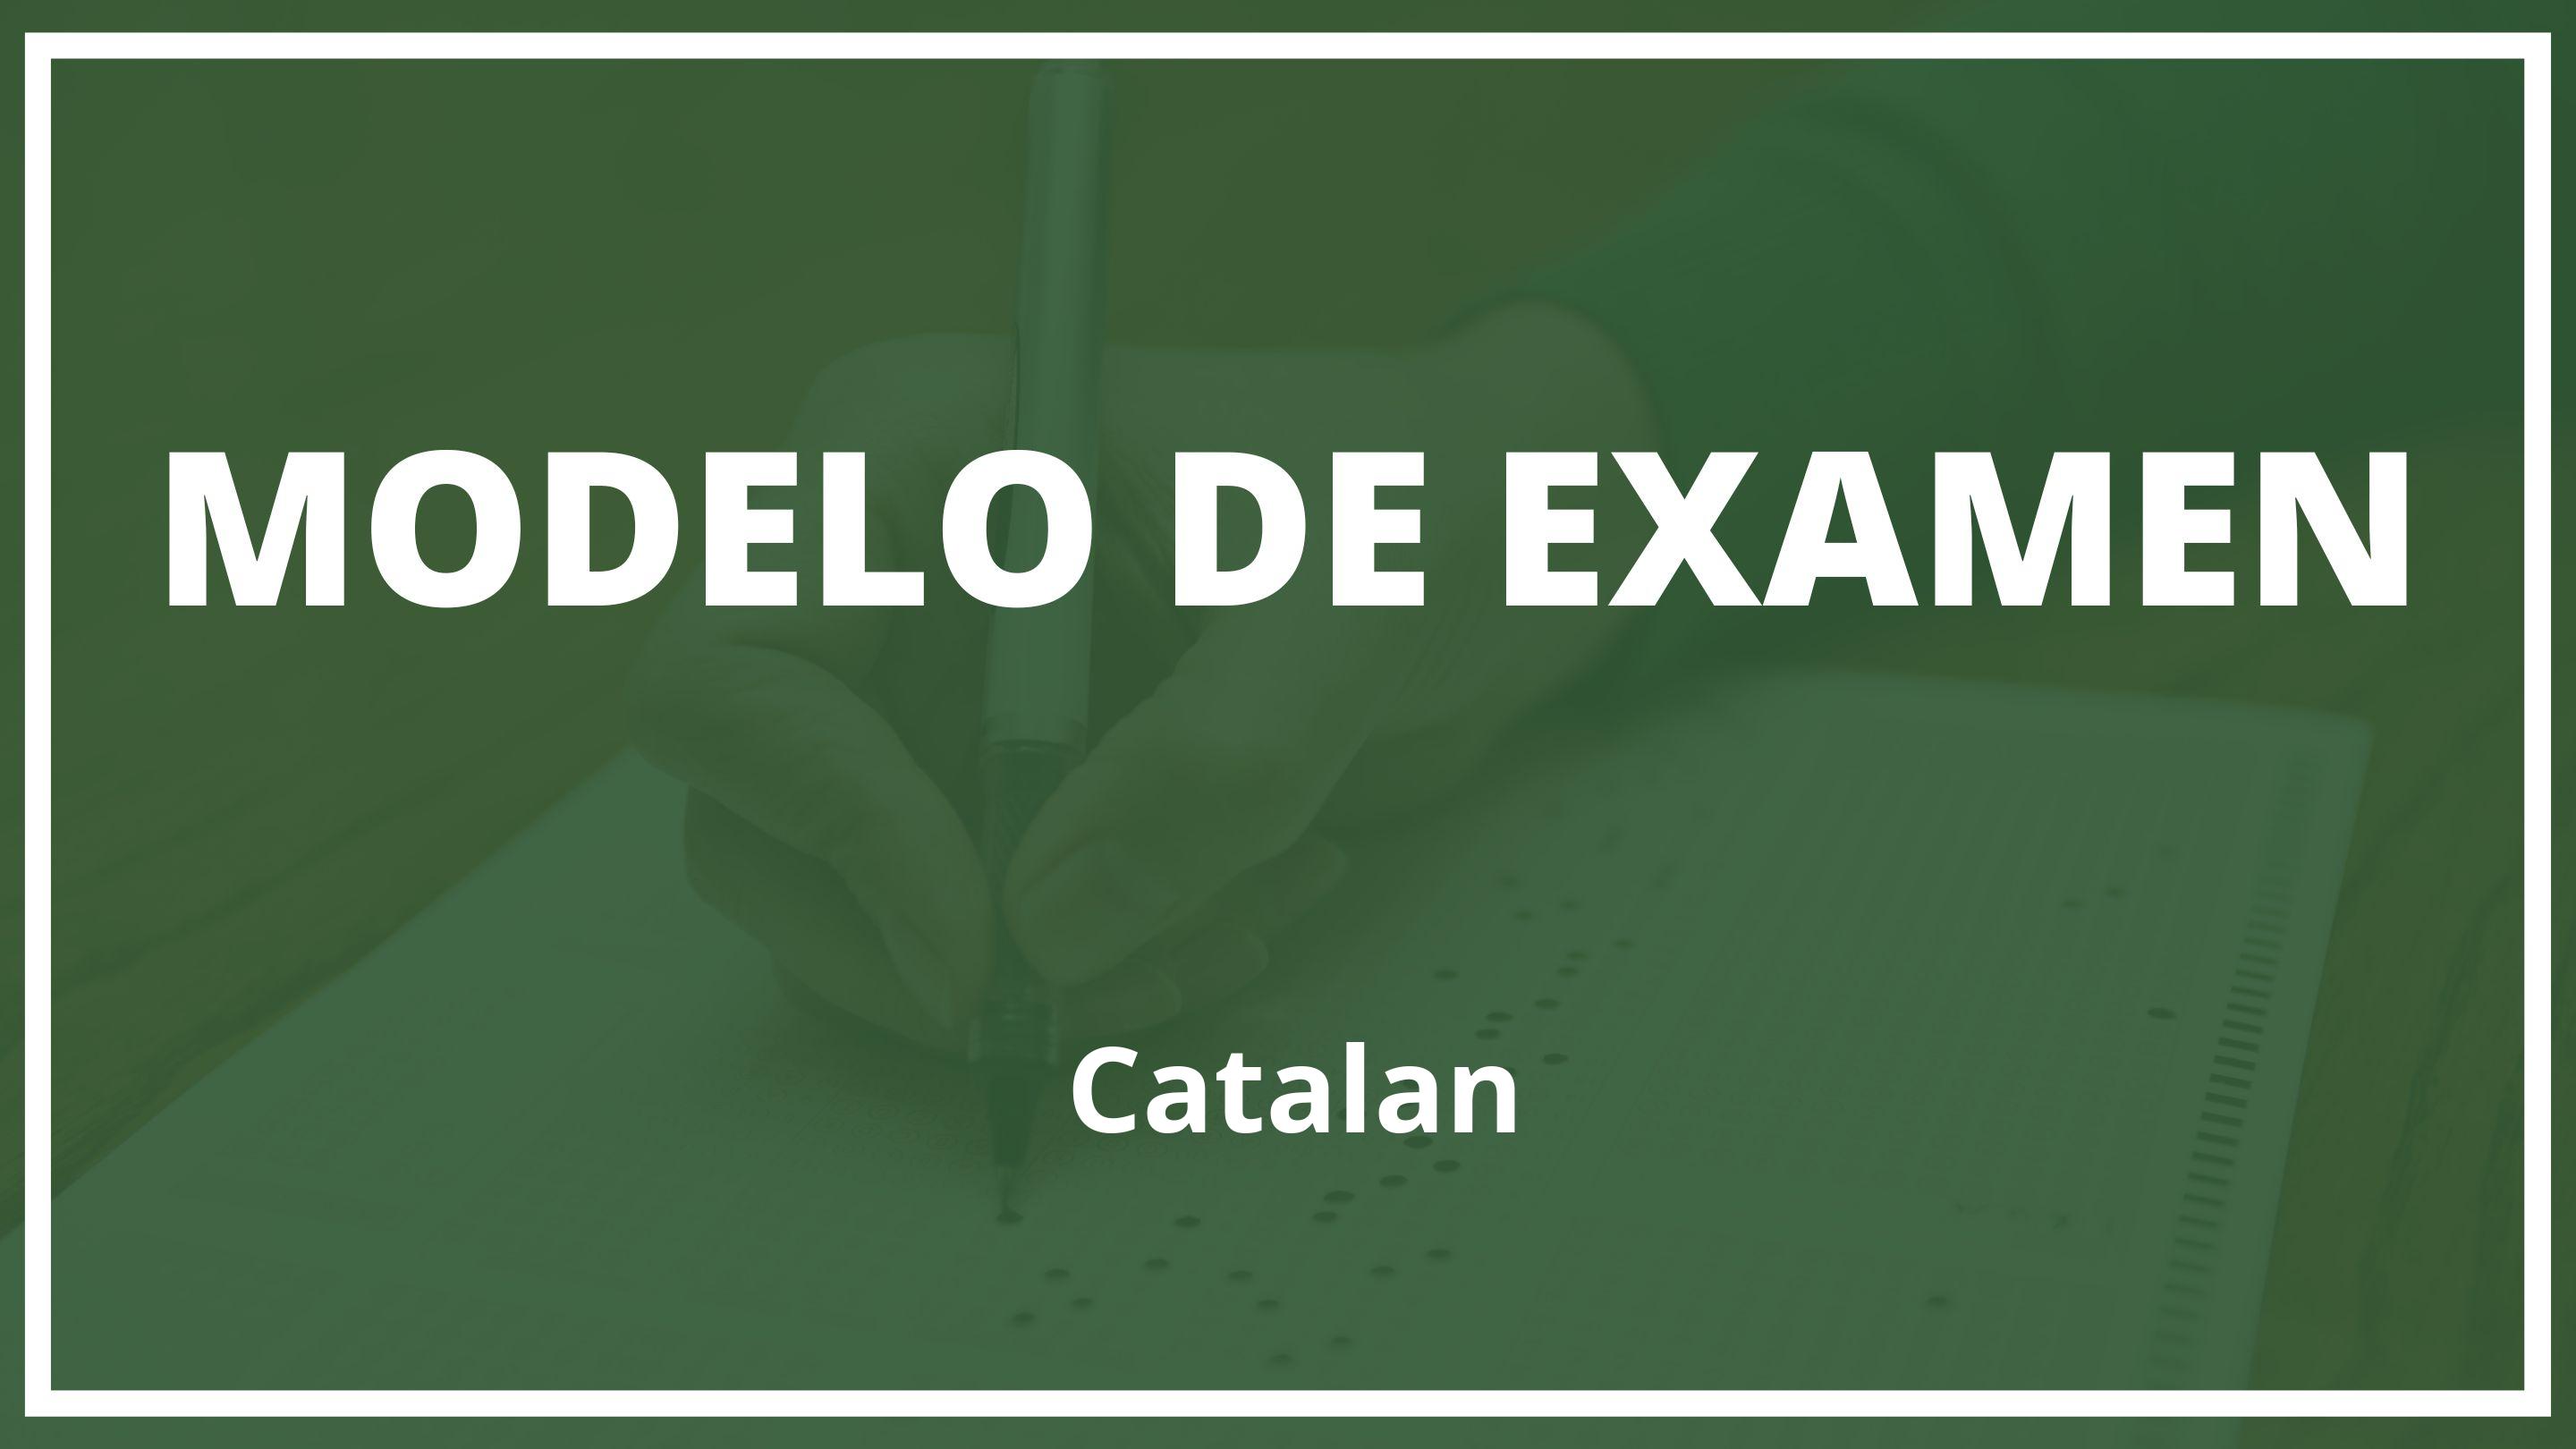 Examen Catalan